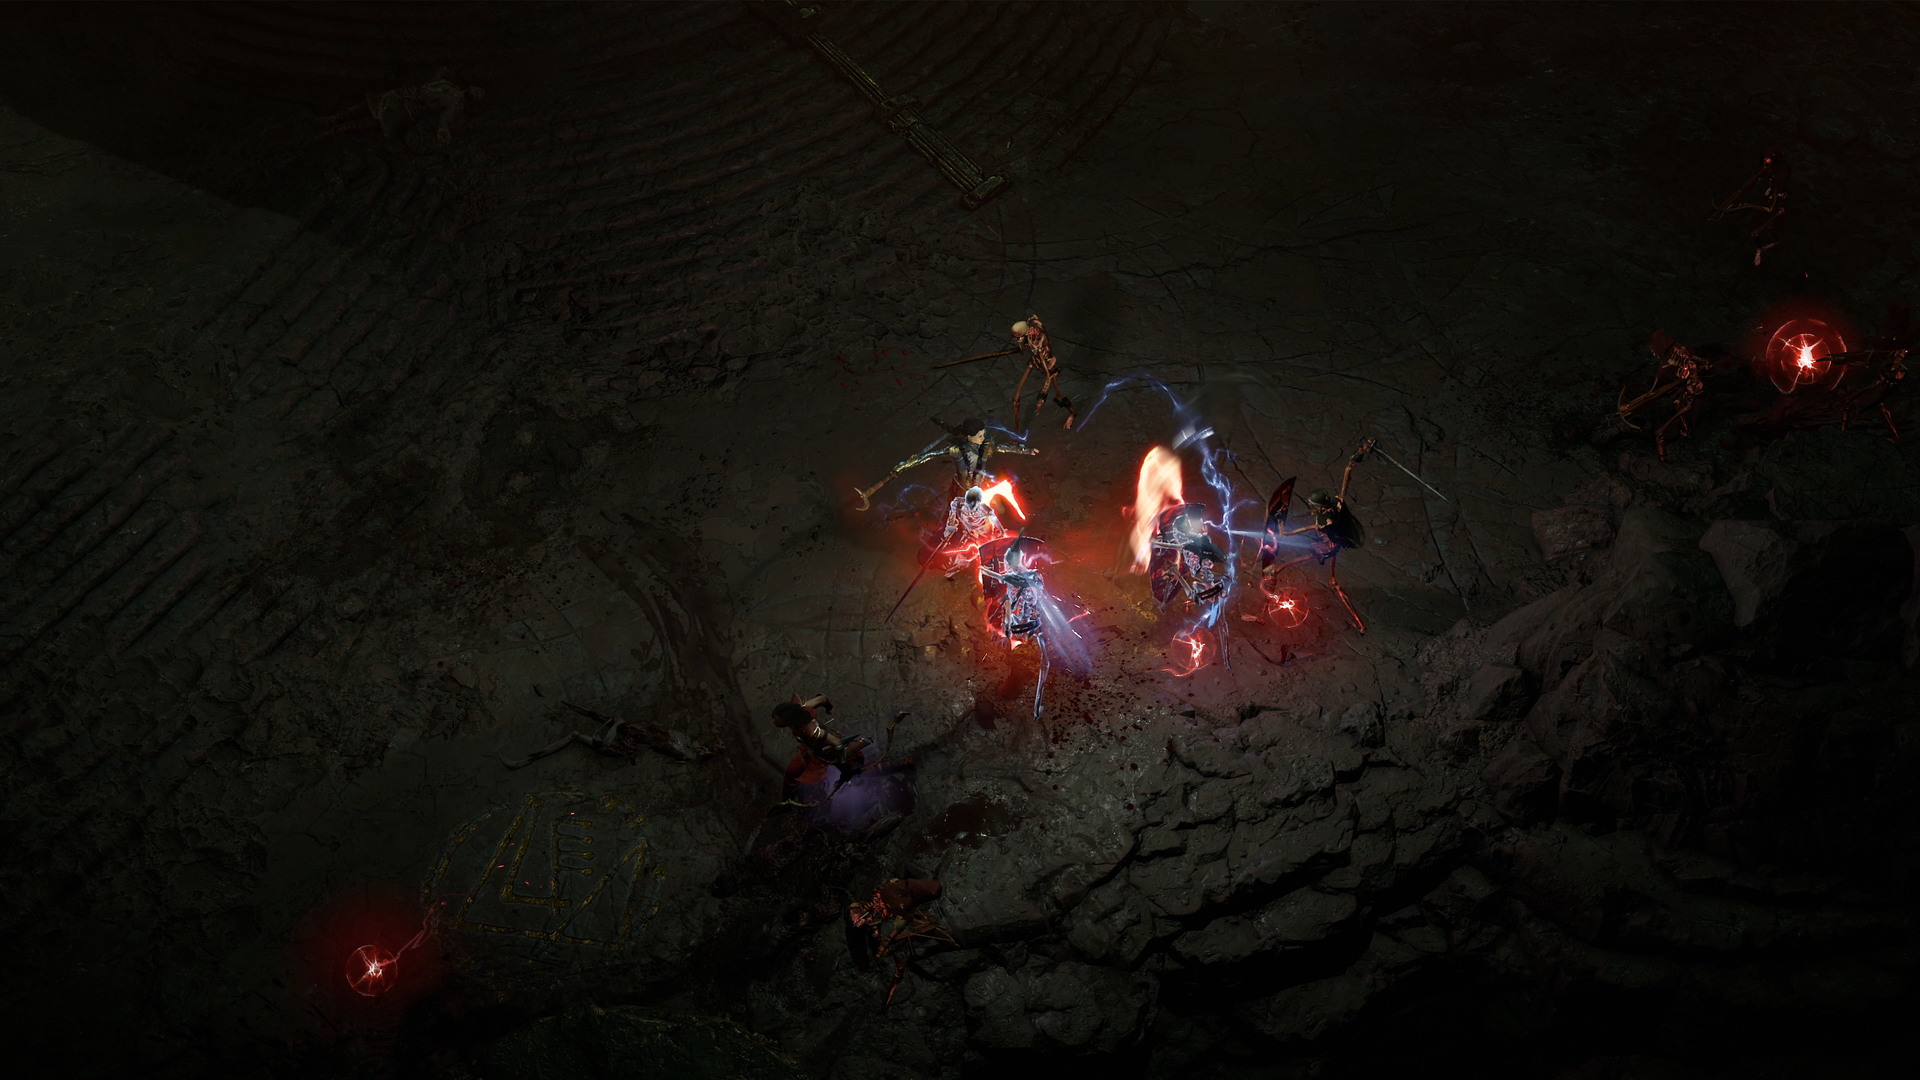 Diablo IV - screenshot 17